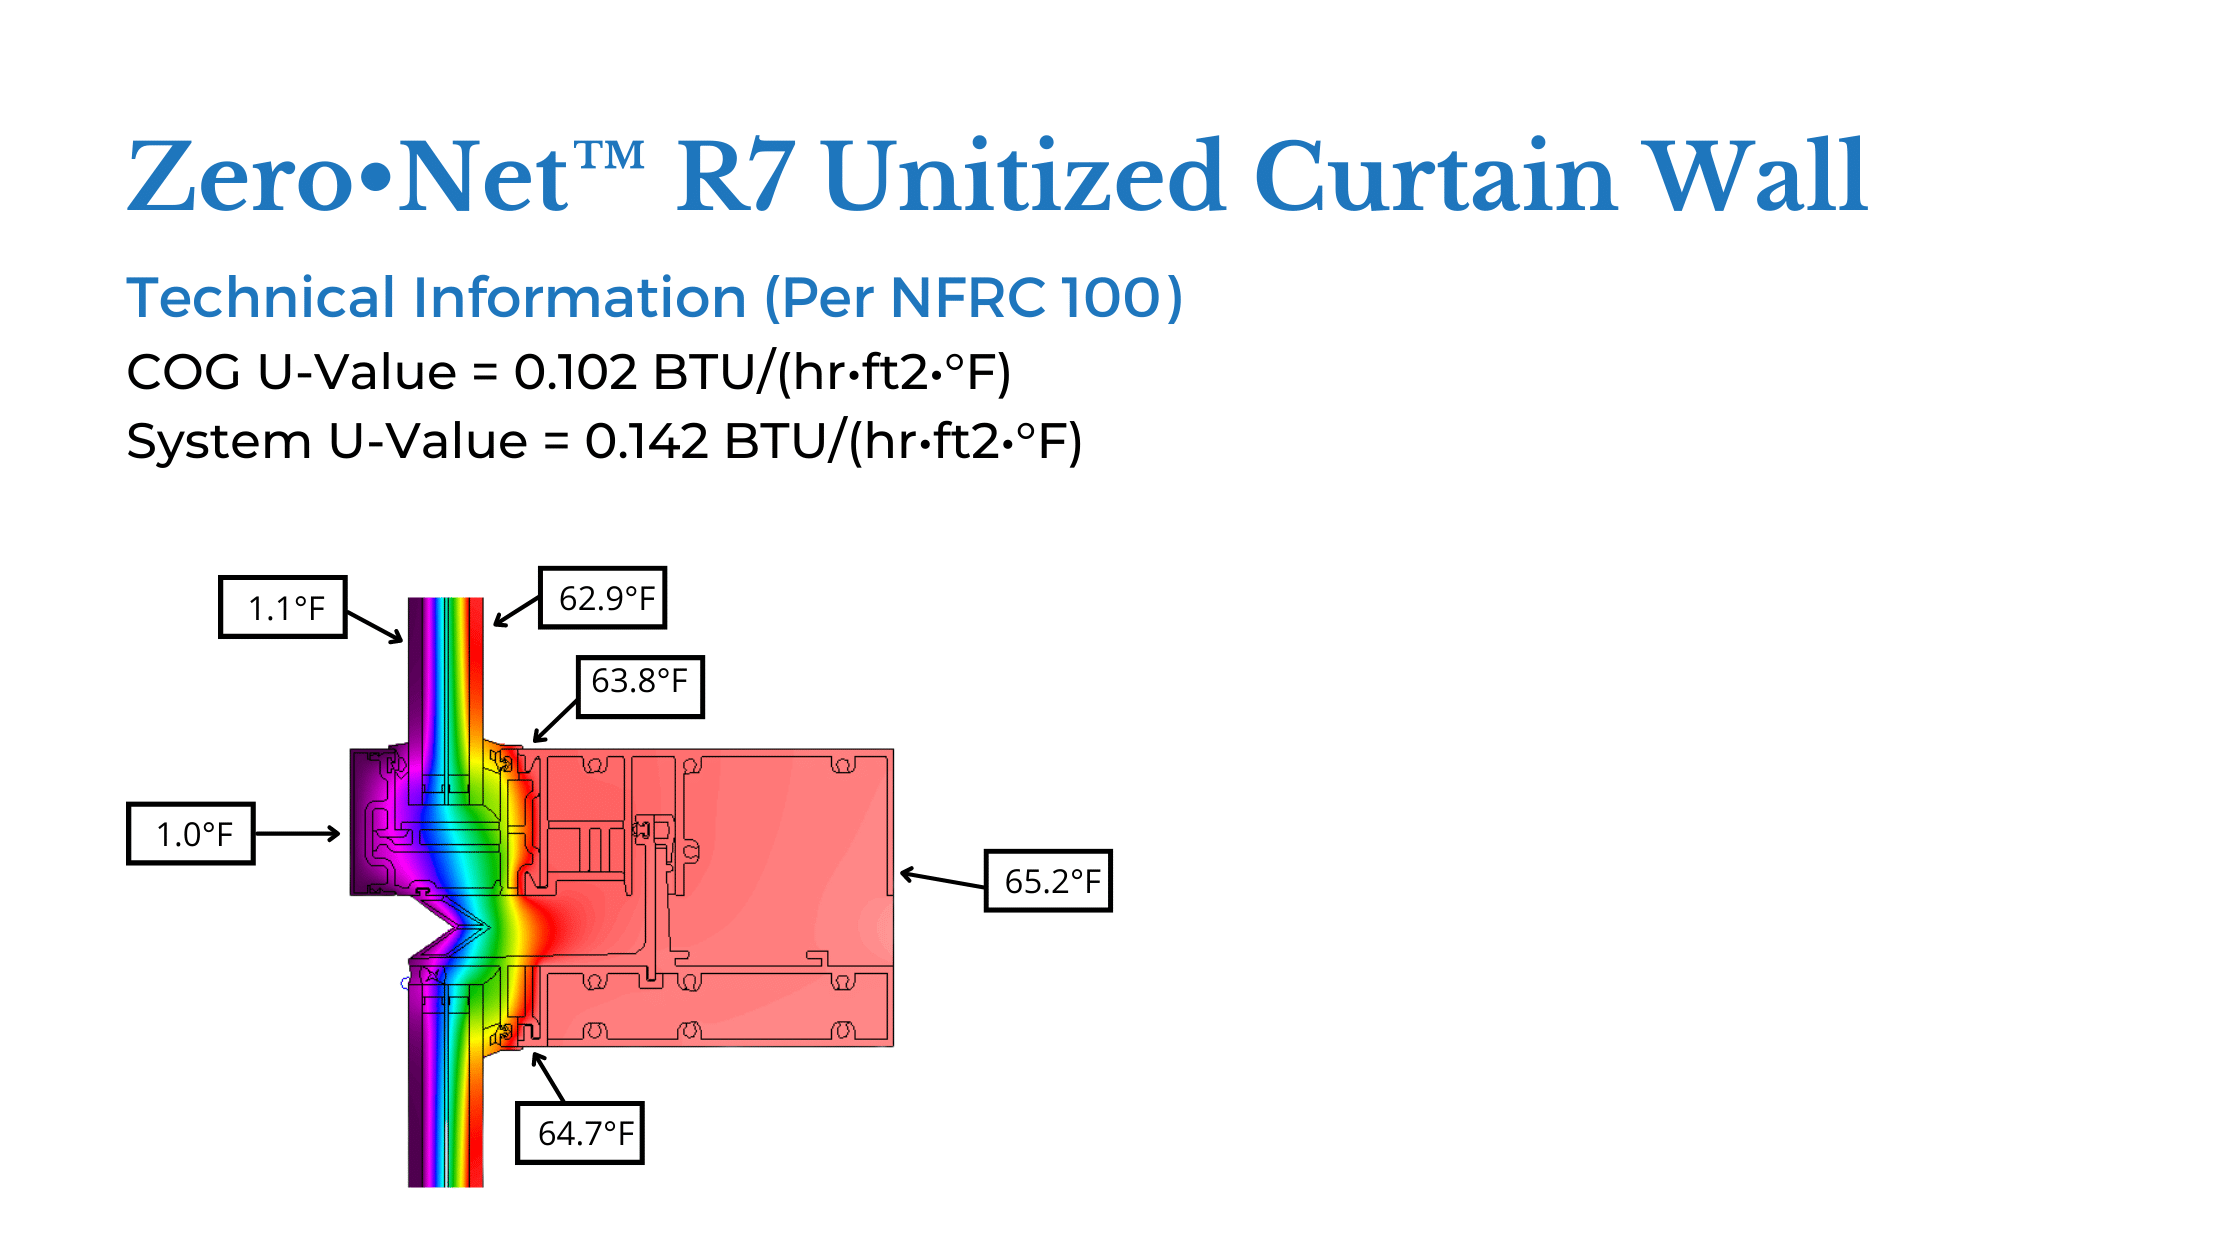 high performance R7 unitized curtain wall<br />
